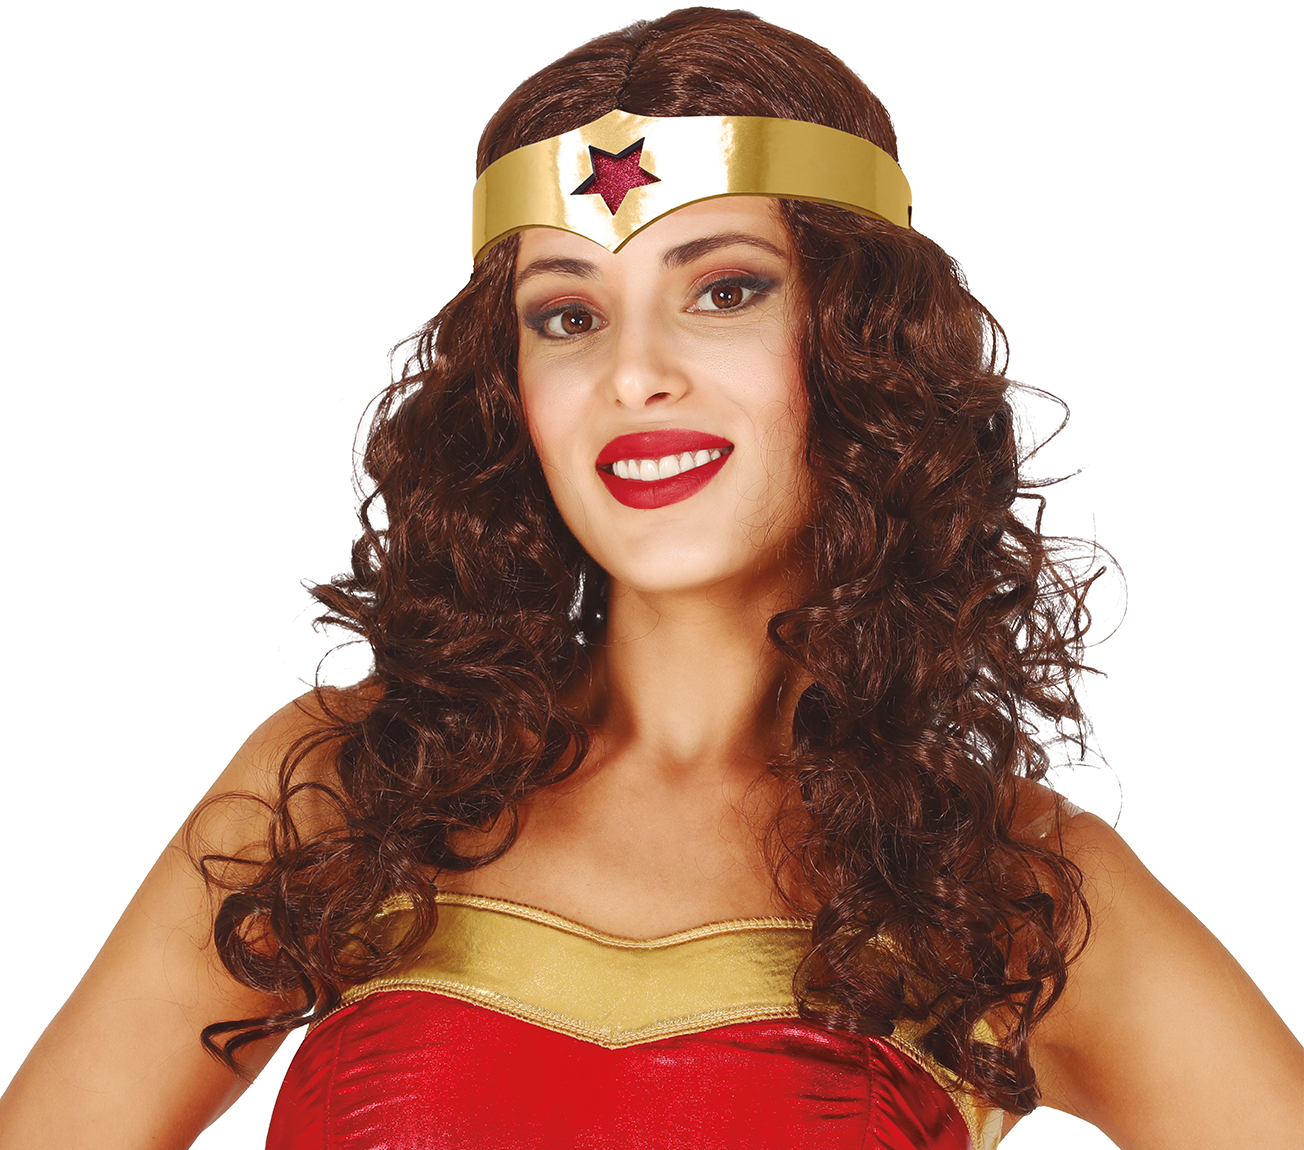 Guirca Paruka Wonder Woman s čelenkou